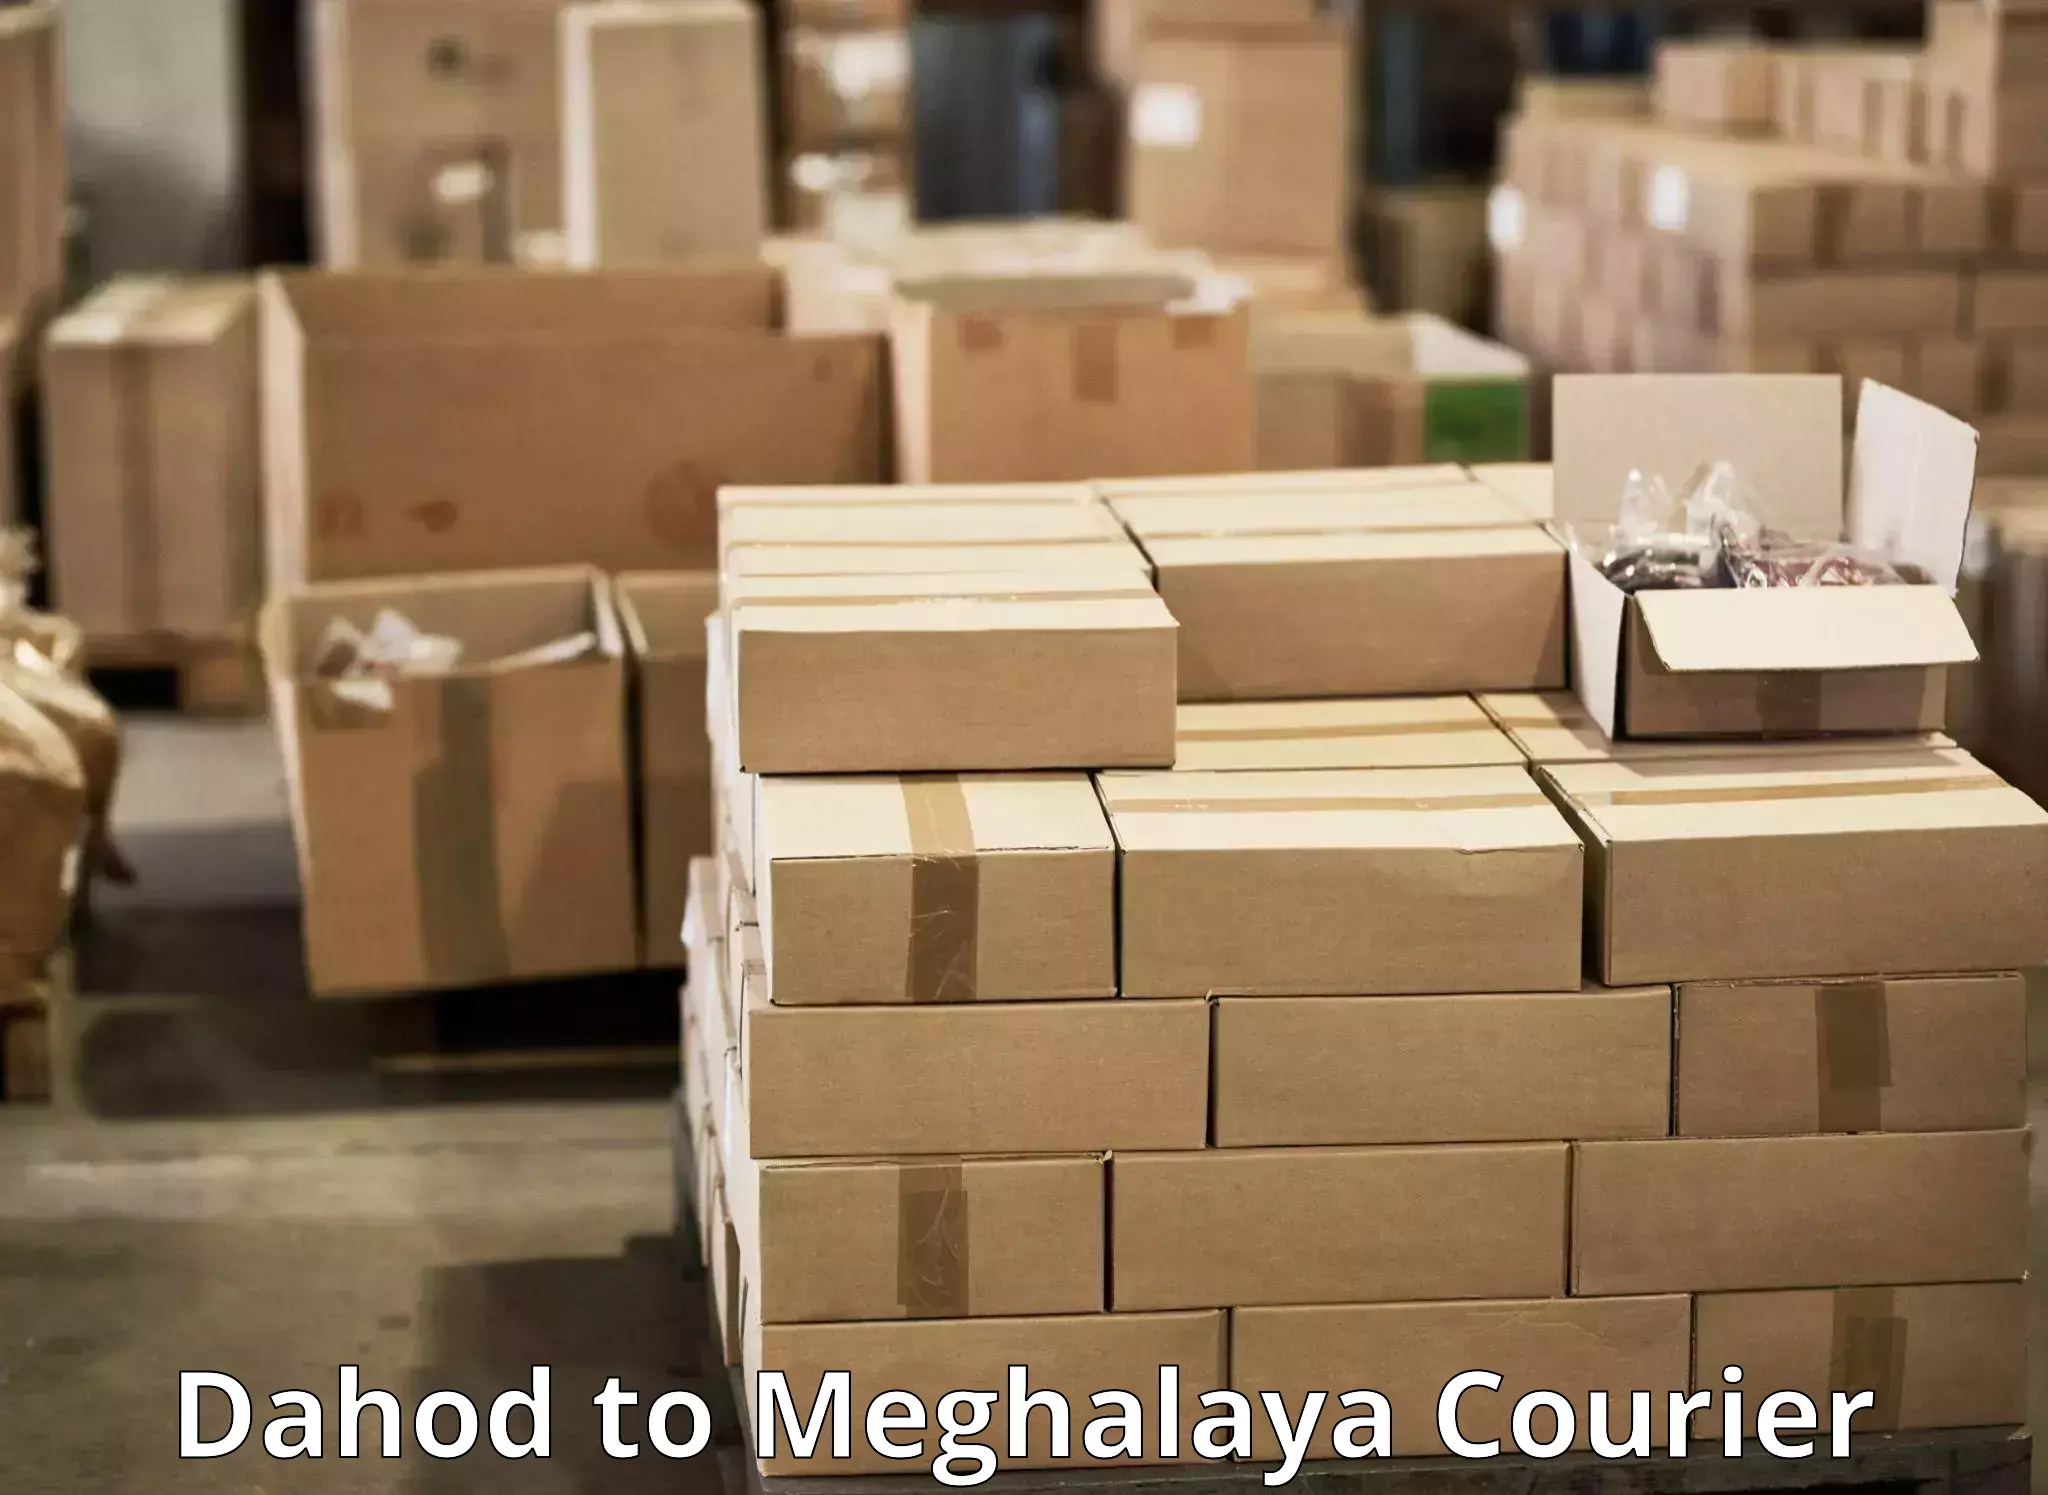 Courier service partnerships Dahod to Meghalaya